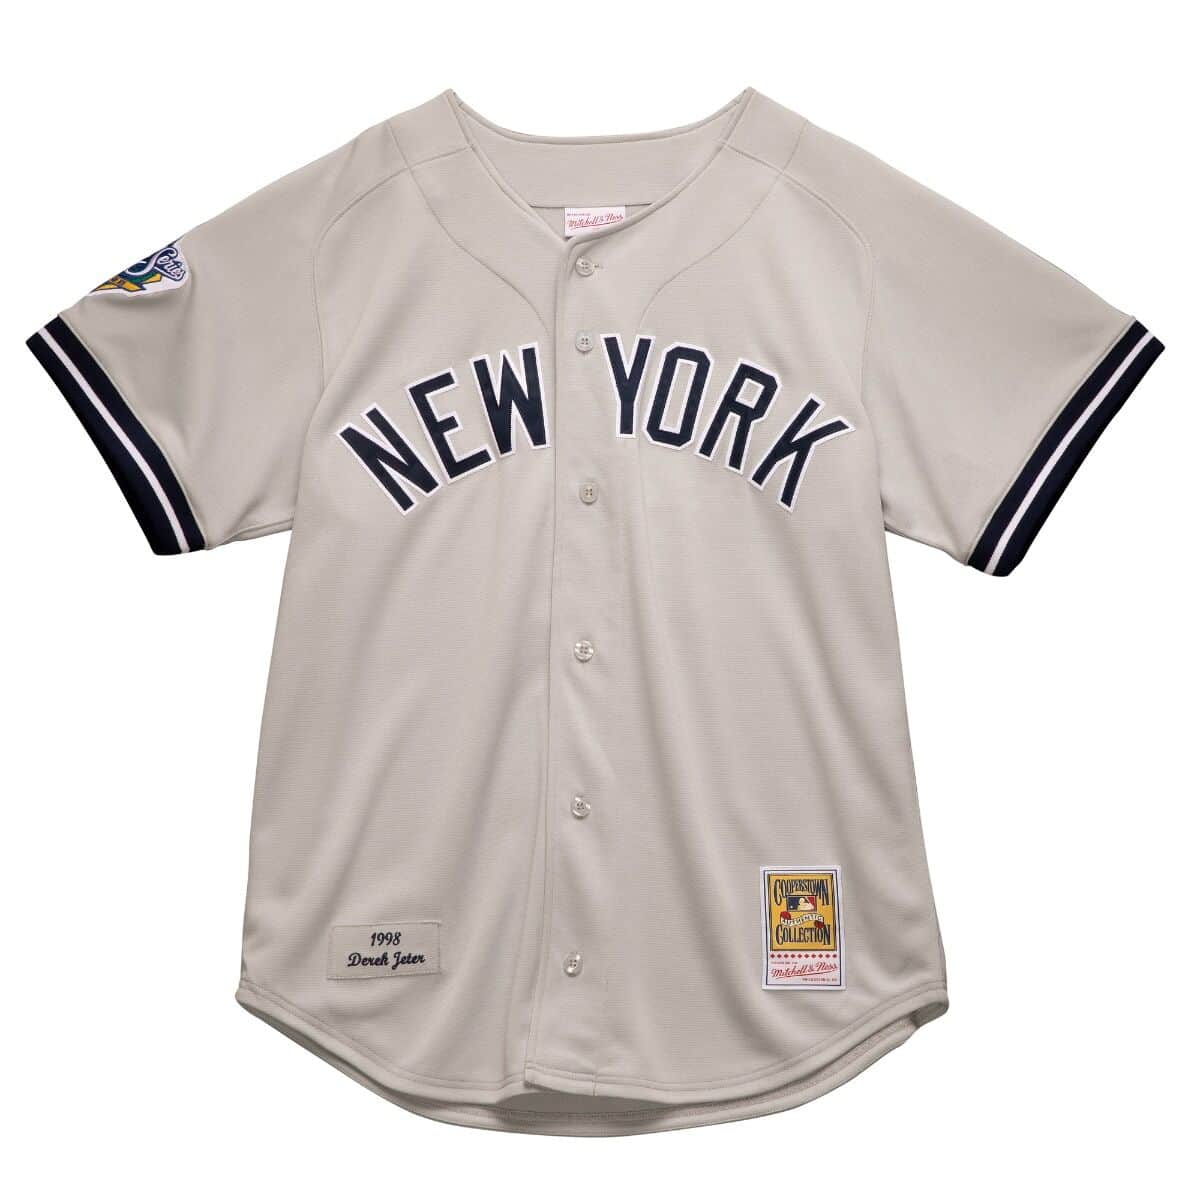 Derek Jeter's New York Yankees jersey the top-selling baseball